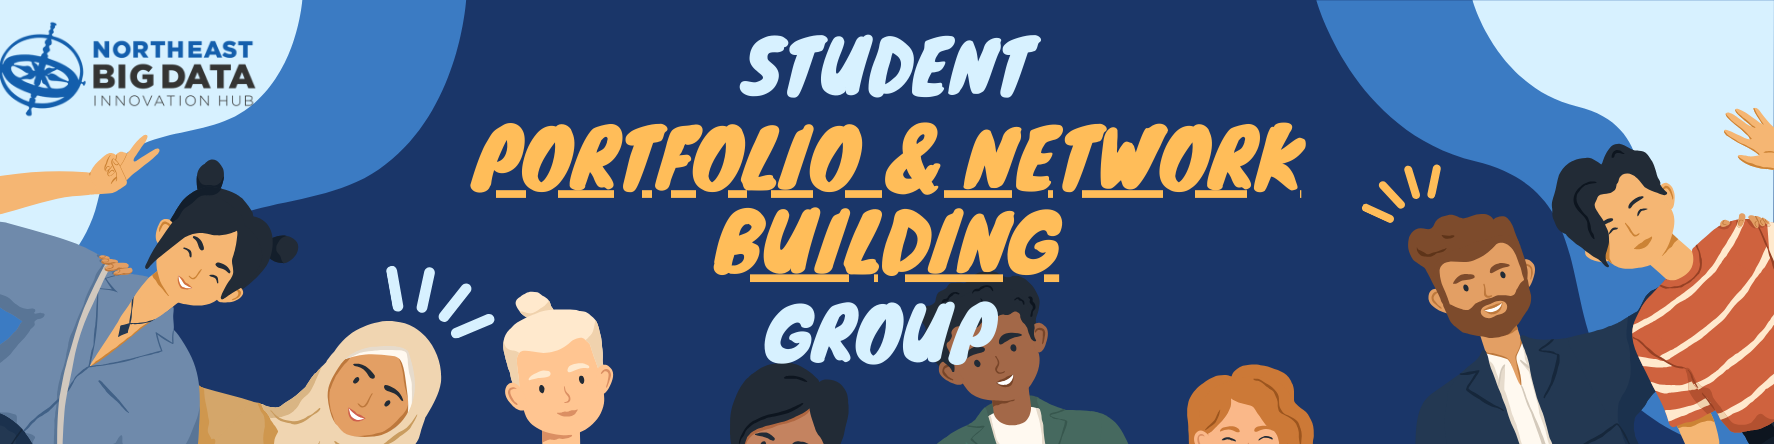 Banner advert for Student Portfolio & Network Building Group